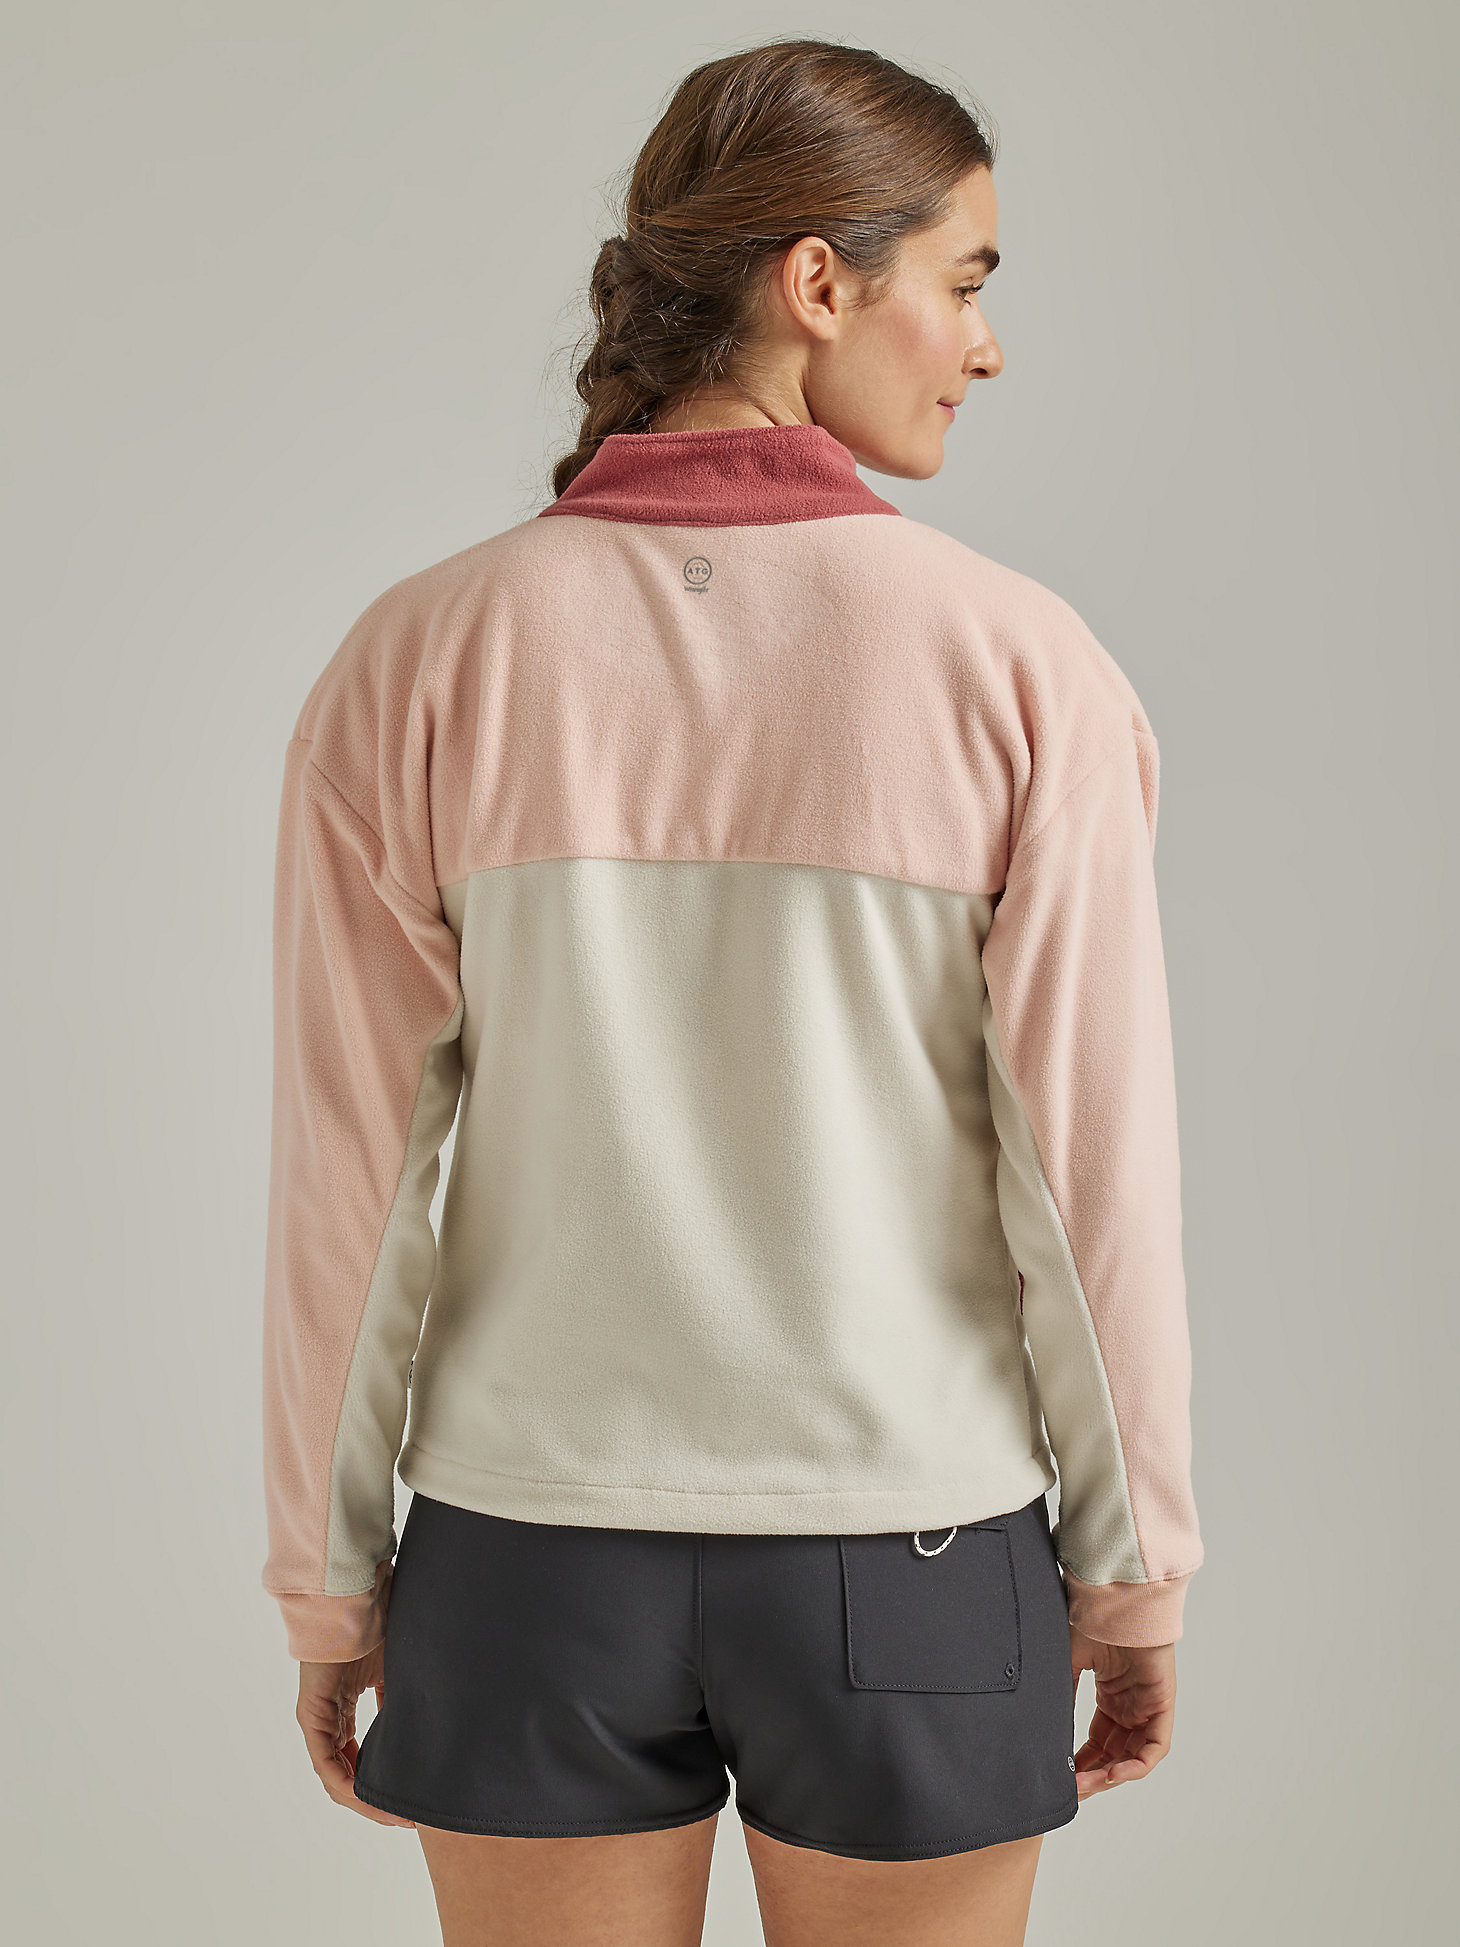 ATG By Wrangler® Women's Horizon Pullover in Rose alternative view 3